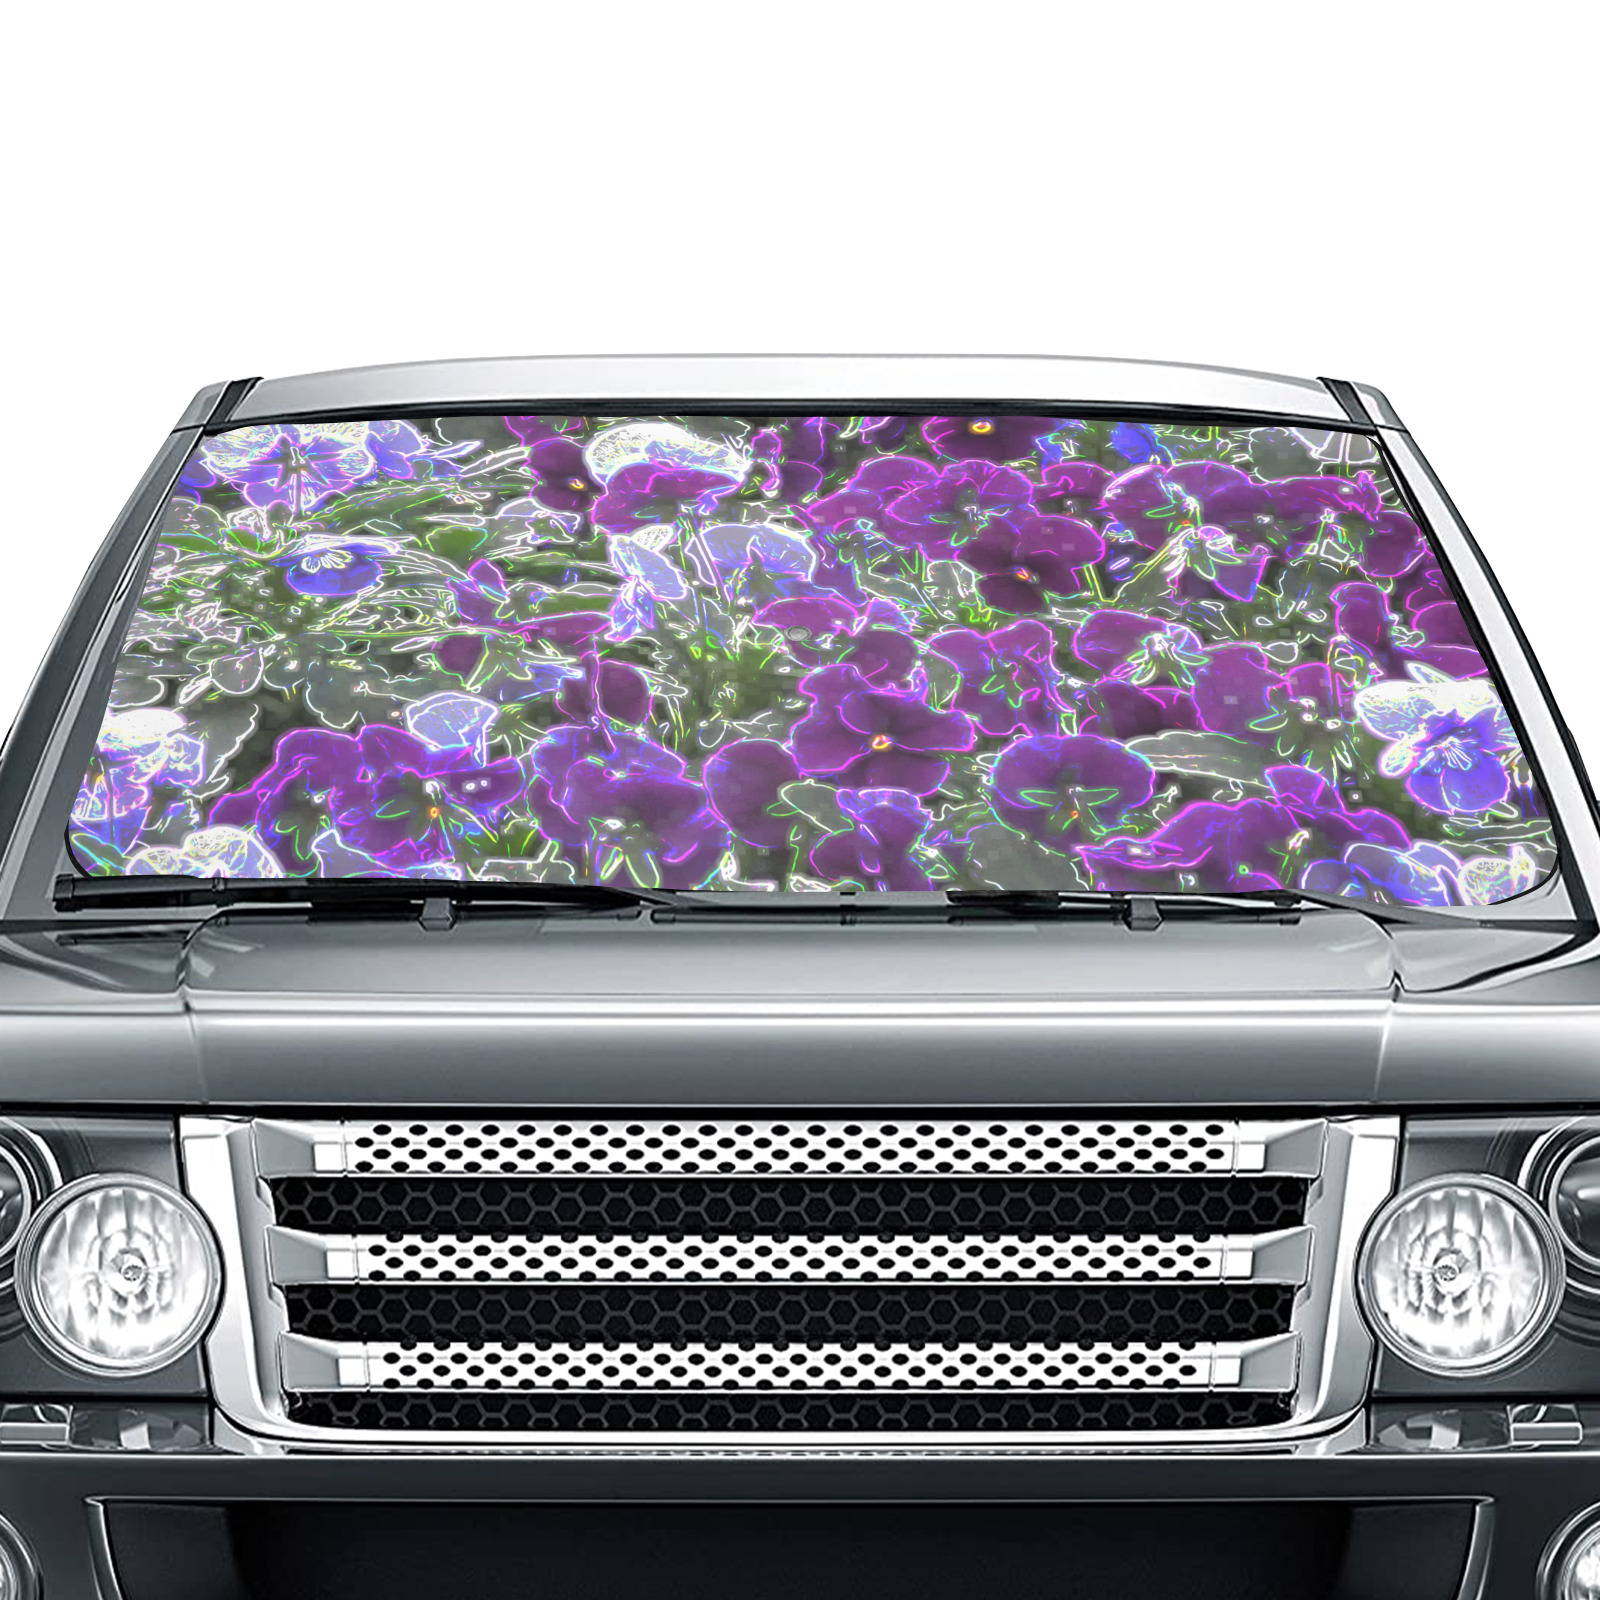 Field Of Purple Flowers 8420 Car Sun Shade Umbrella 58"x29"